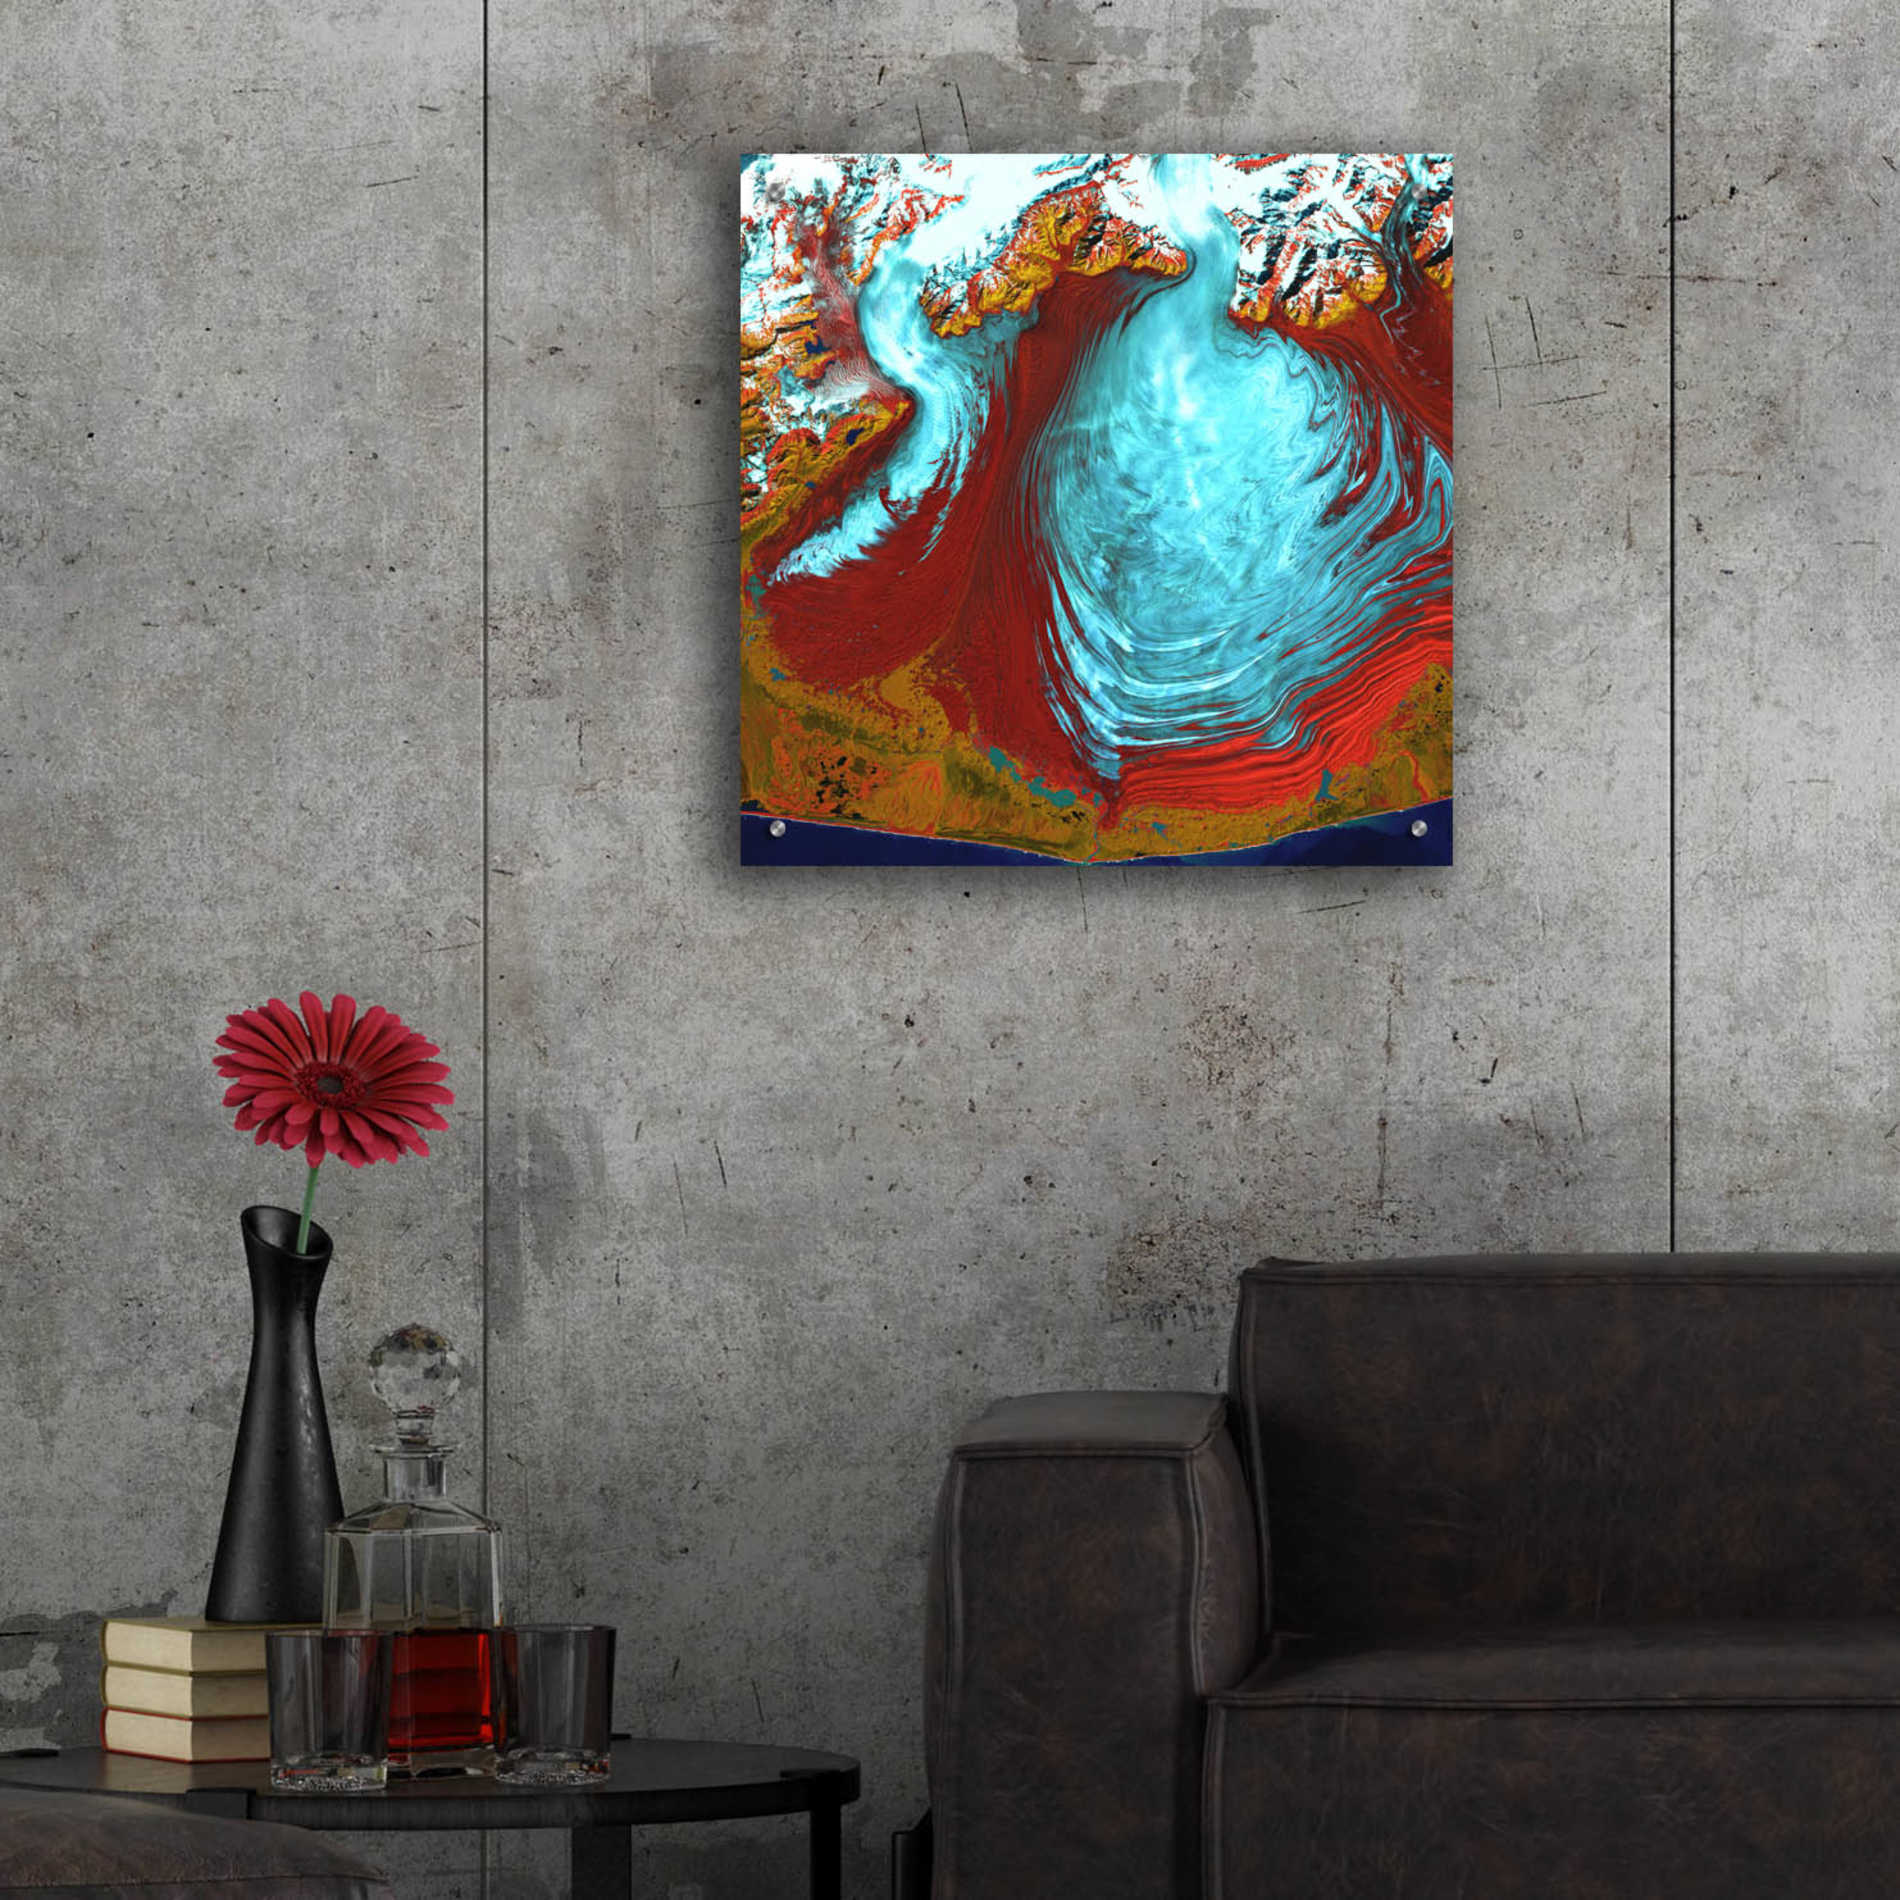 Epic Art 'Earth as Art: Malaspina Glacier' Acrylic Glass Wall Art,24x24